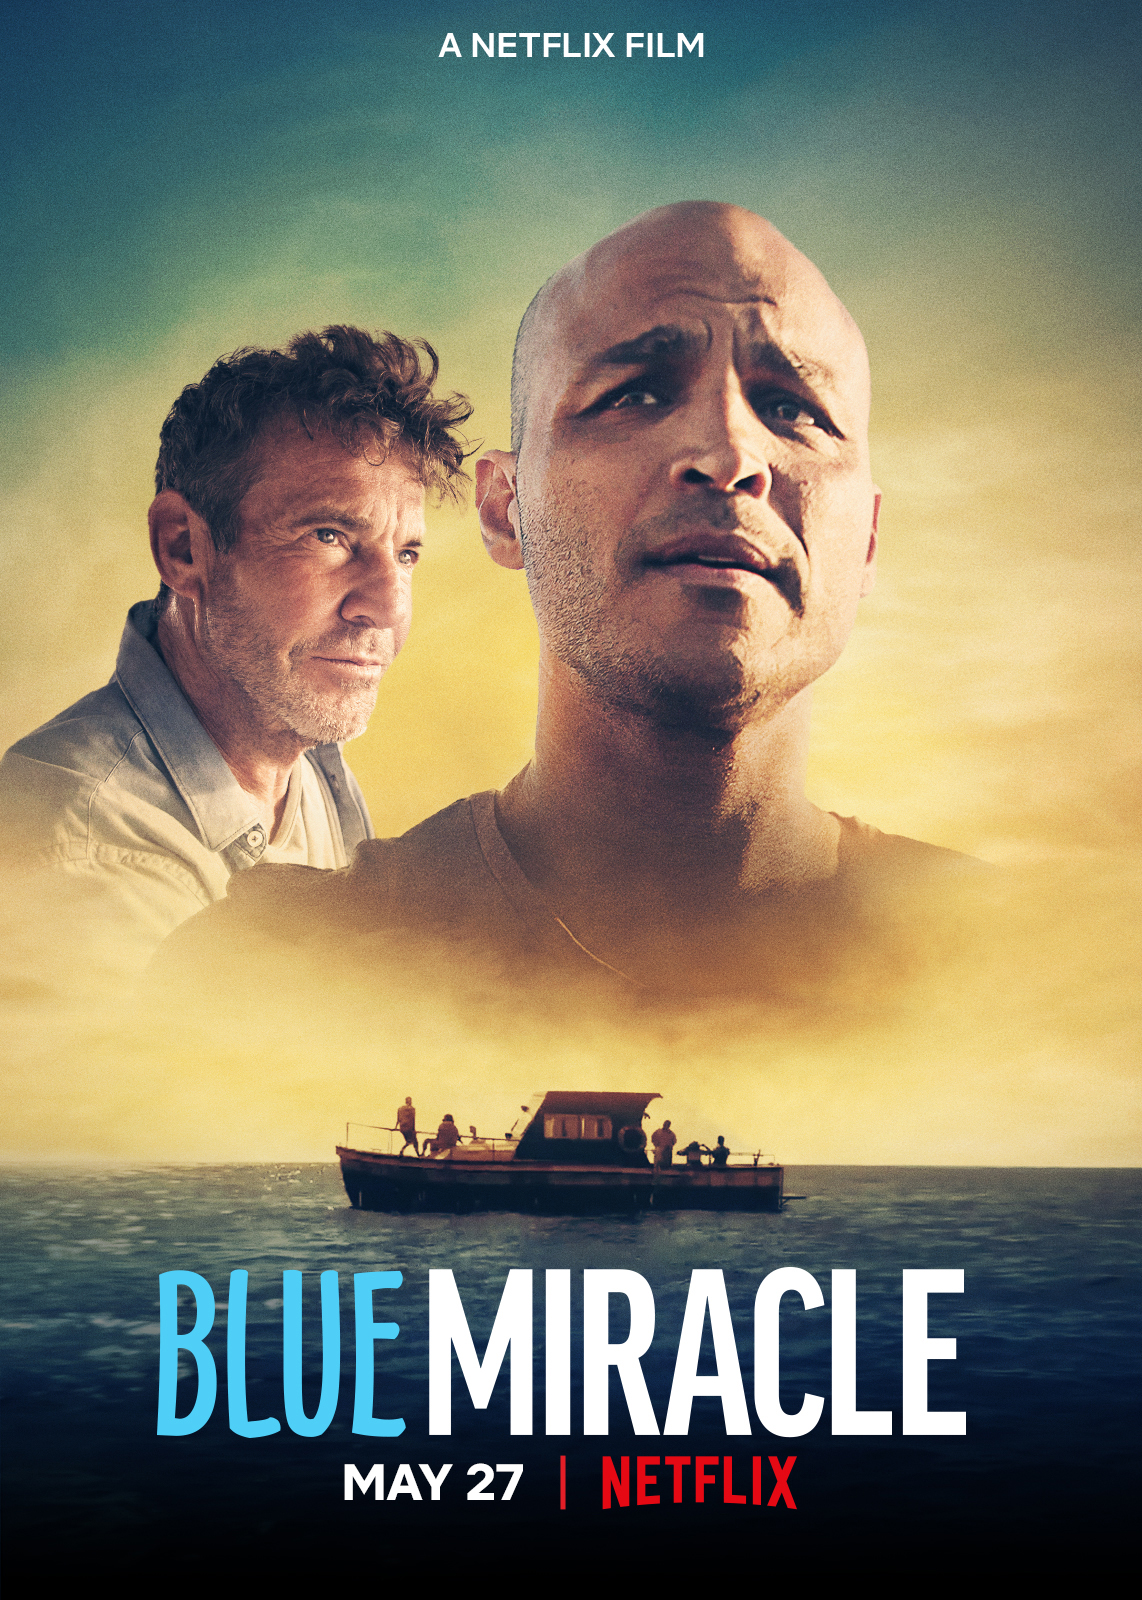 Nonton film Blue Miracle layarkaca21 indoxx1 ganool online streaming terbaru